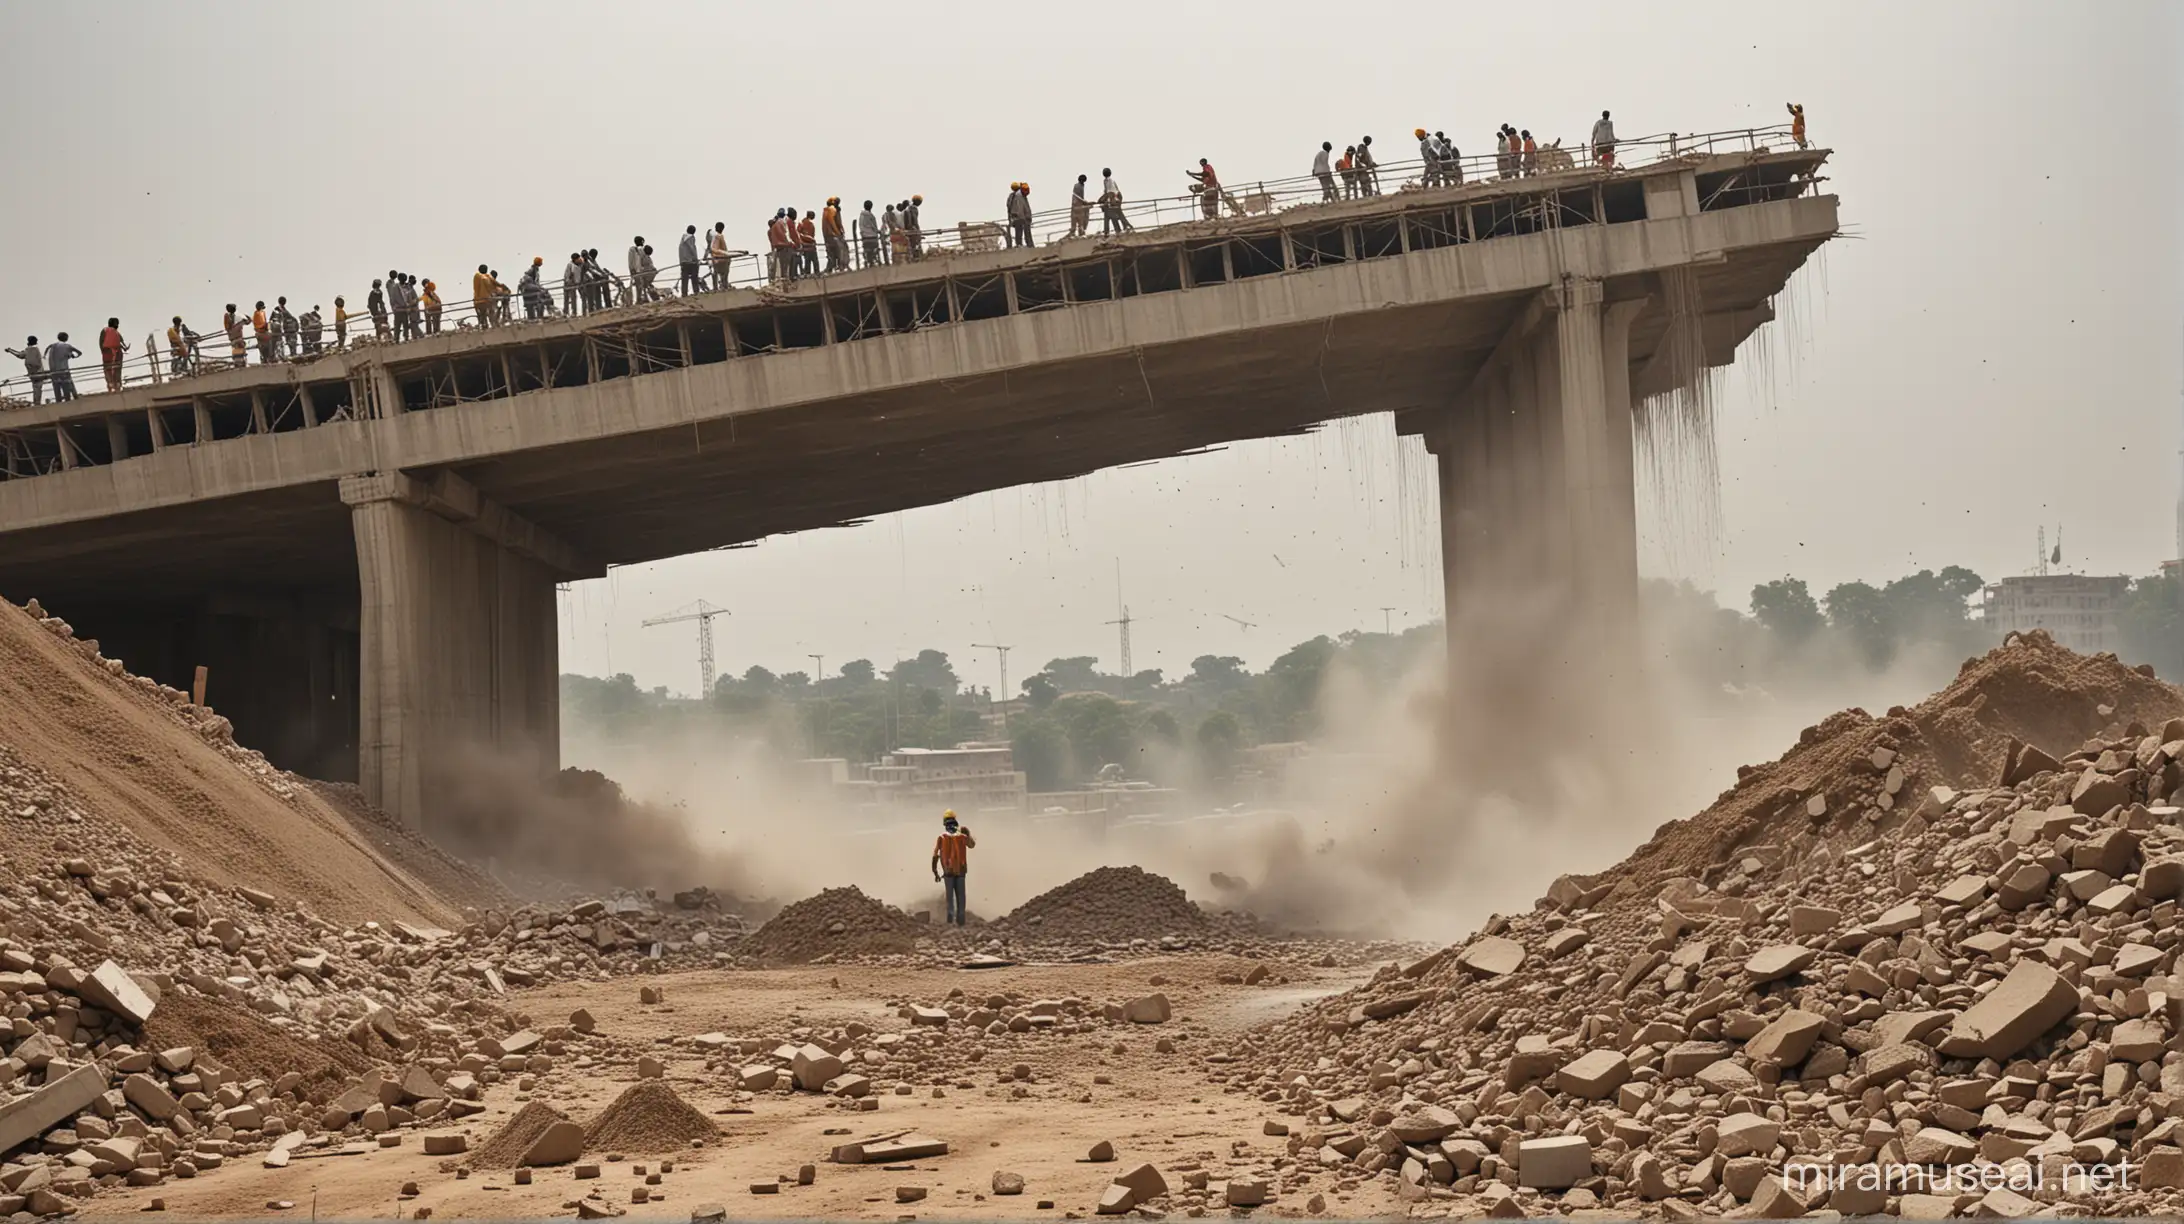 Bridge Collapse in India Devastation and Urgency